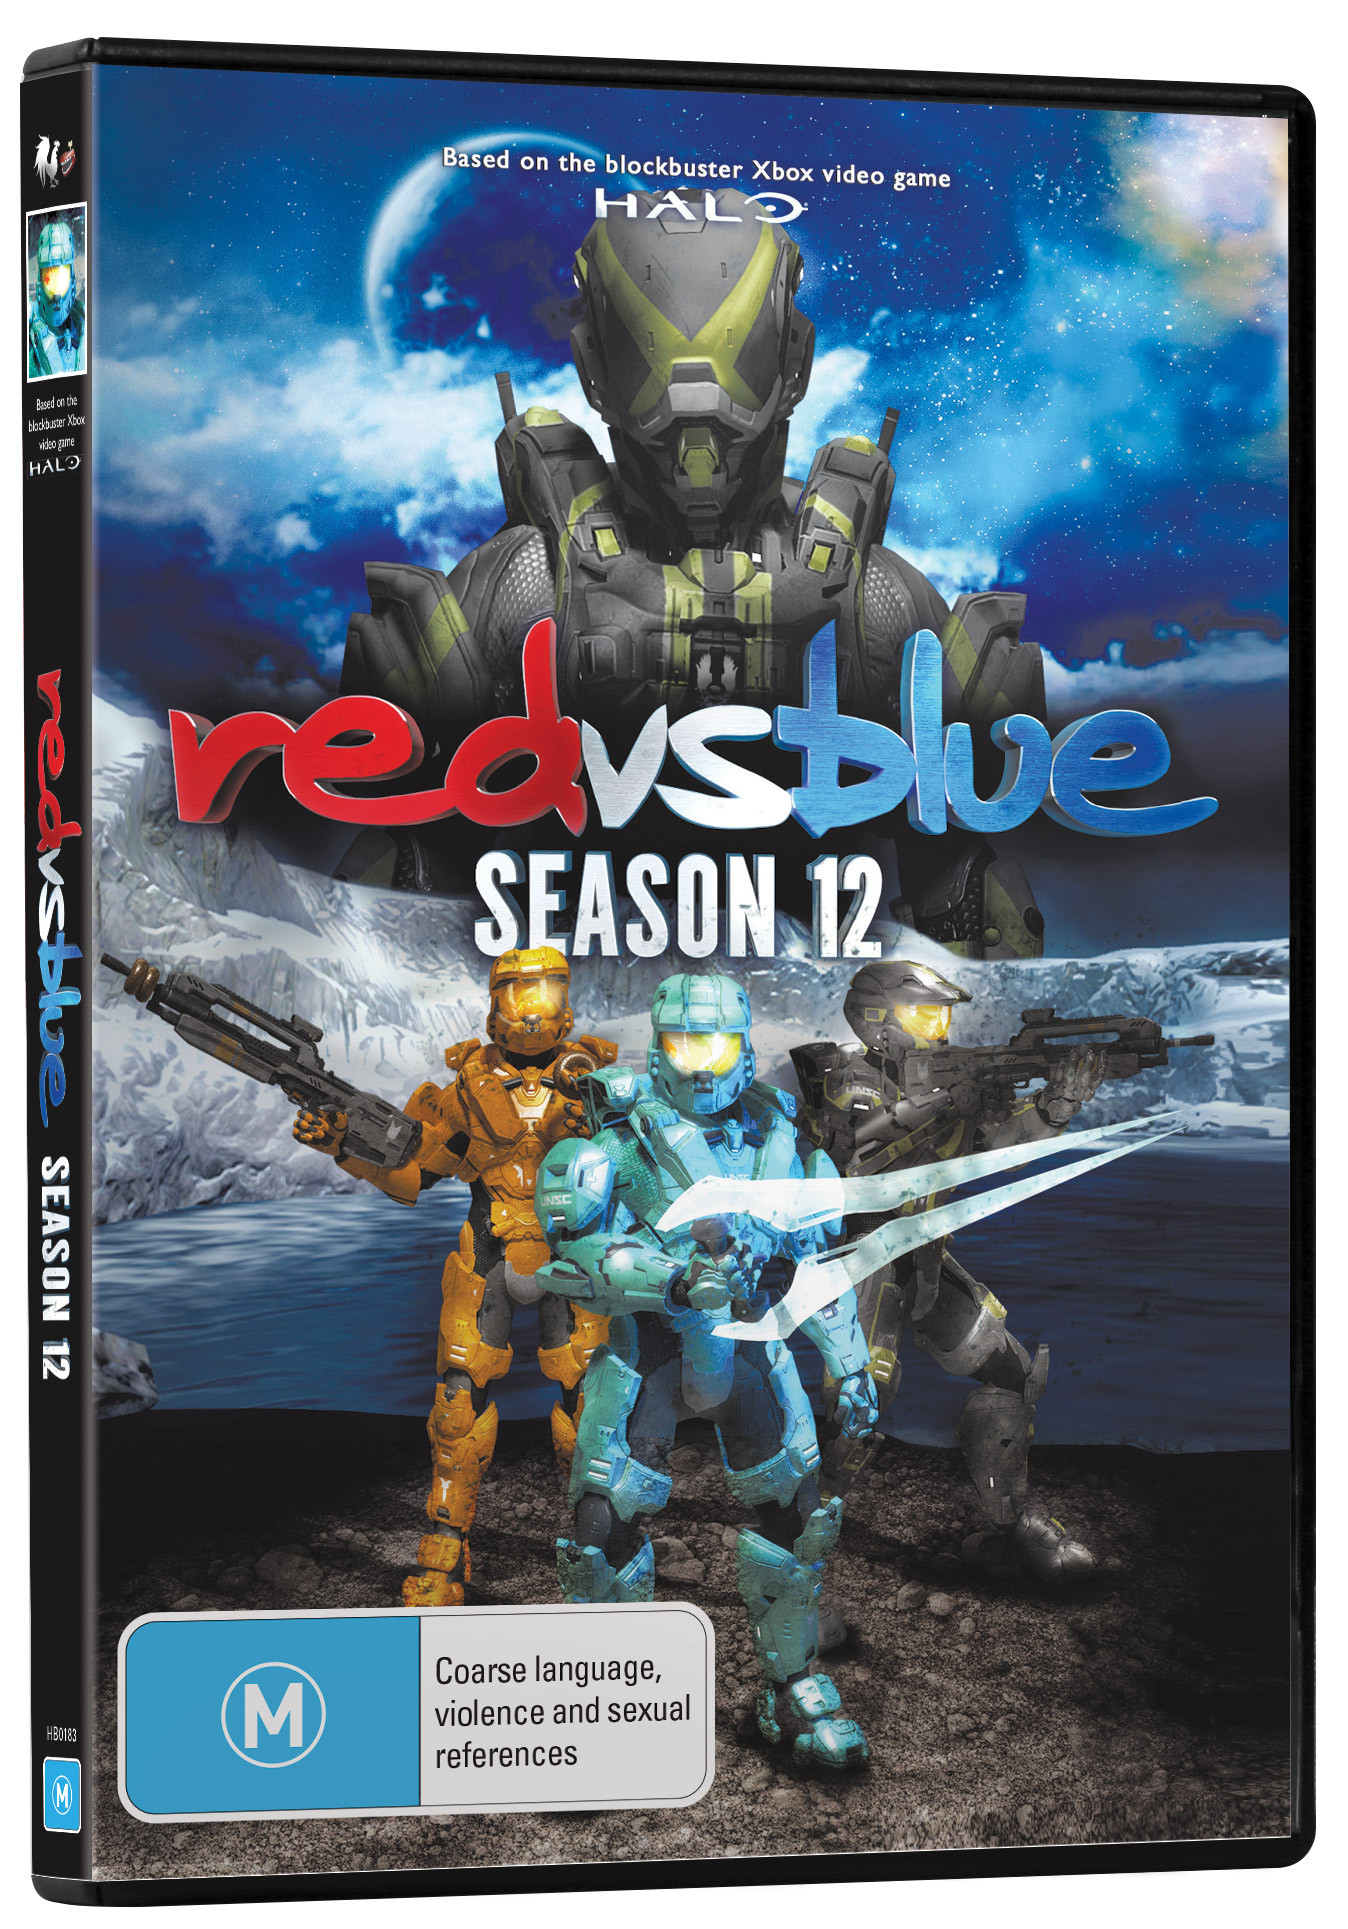 Red vs Blue Season 12 Review